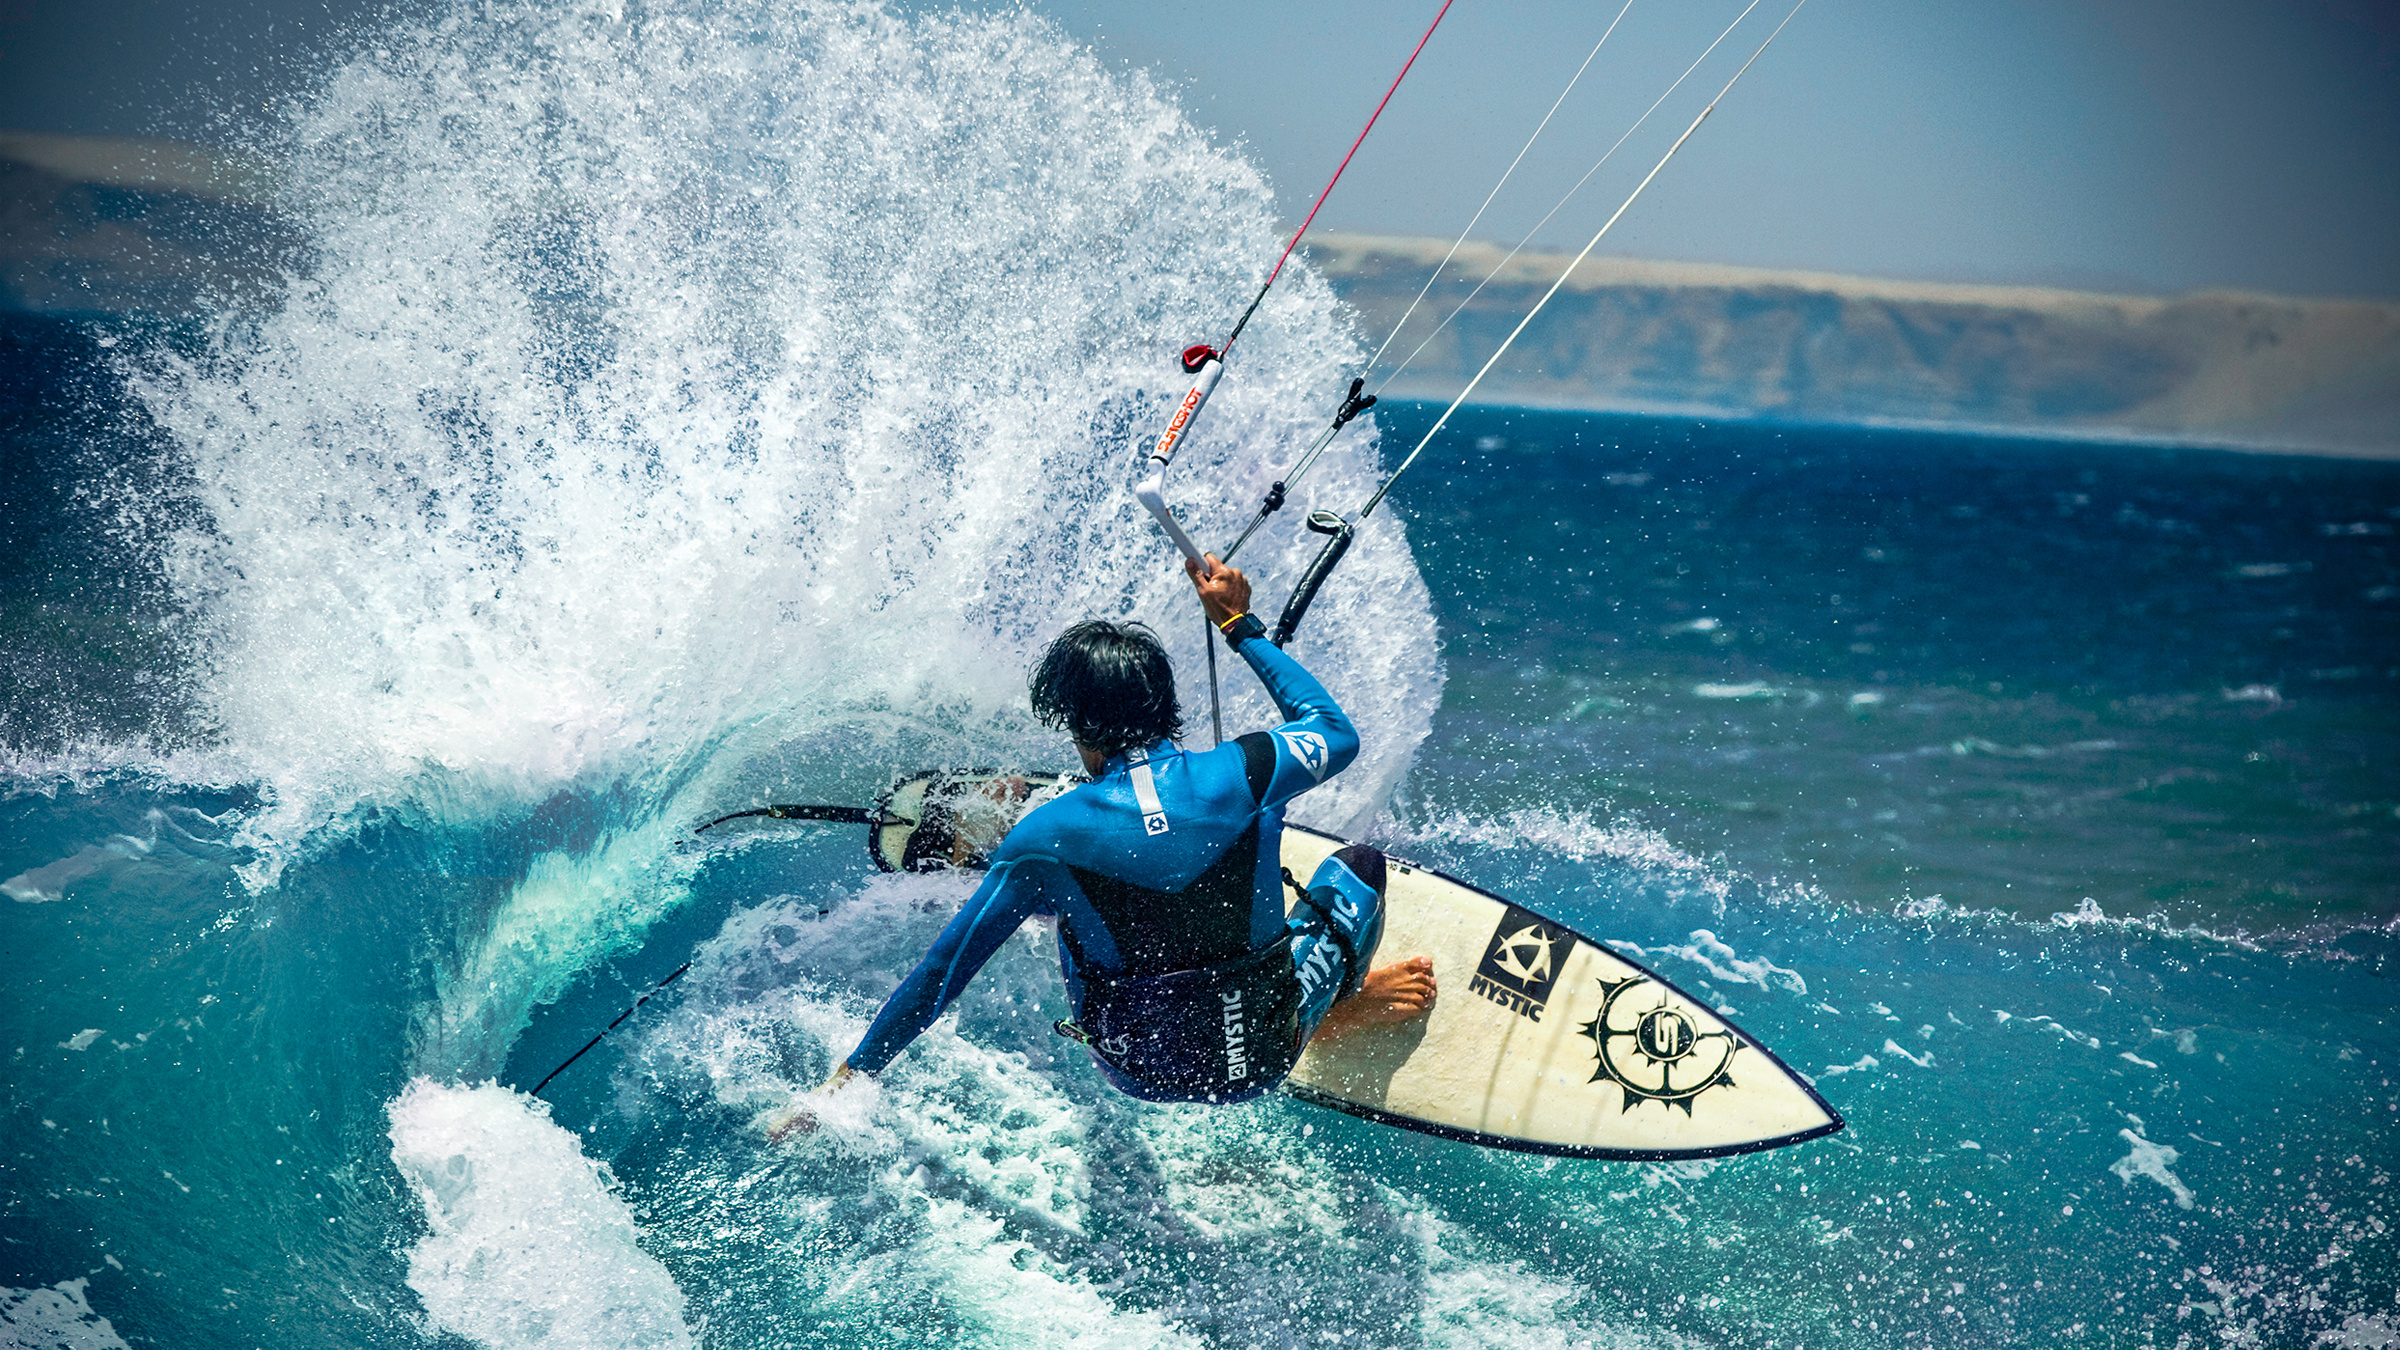 Kiteboarding: Mauricio Abreu, Shredding a wave, A legend in kiteboarding. 2400x1350 HD Wallpaper.